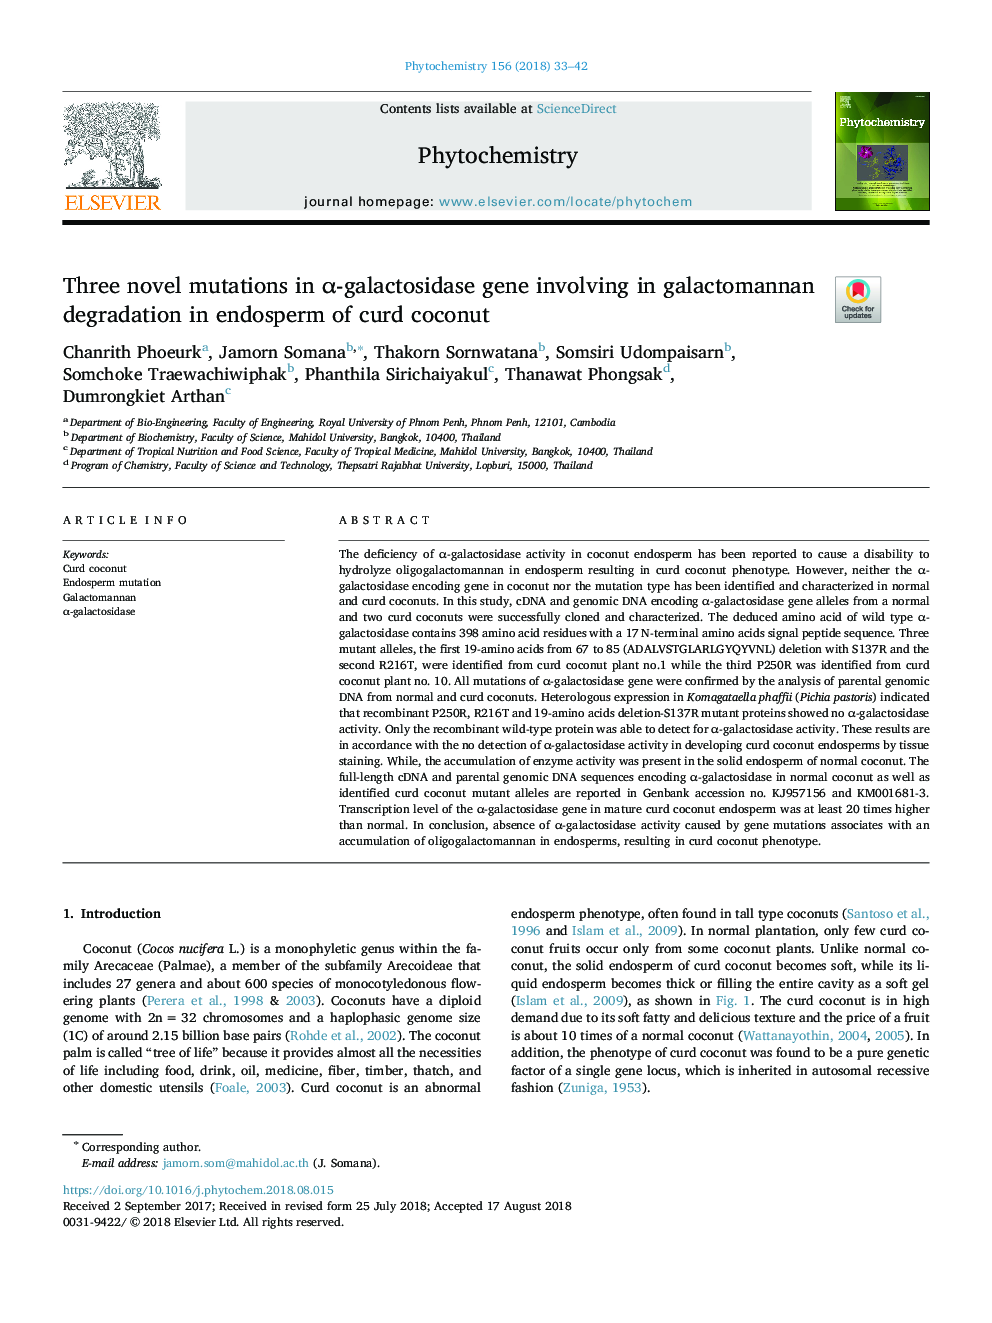 Three novel mutations in Î±-galactosidase gene involving in galactomannan degradation in endosperm of curd coconut